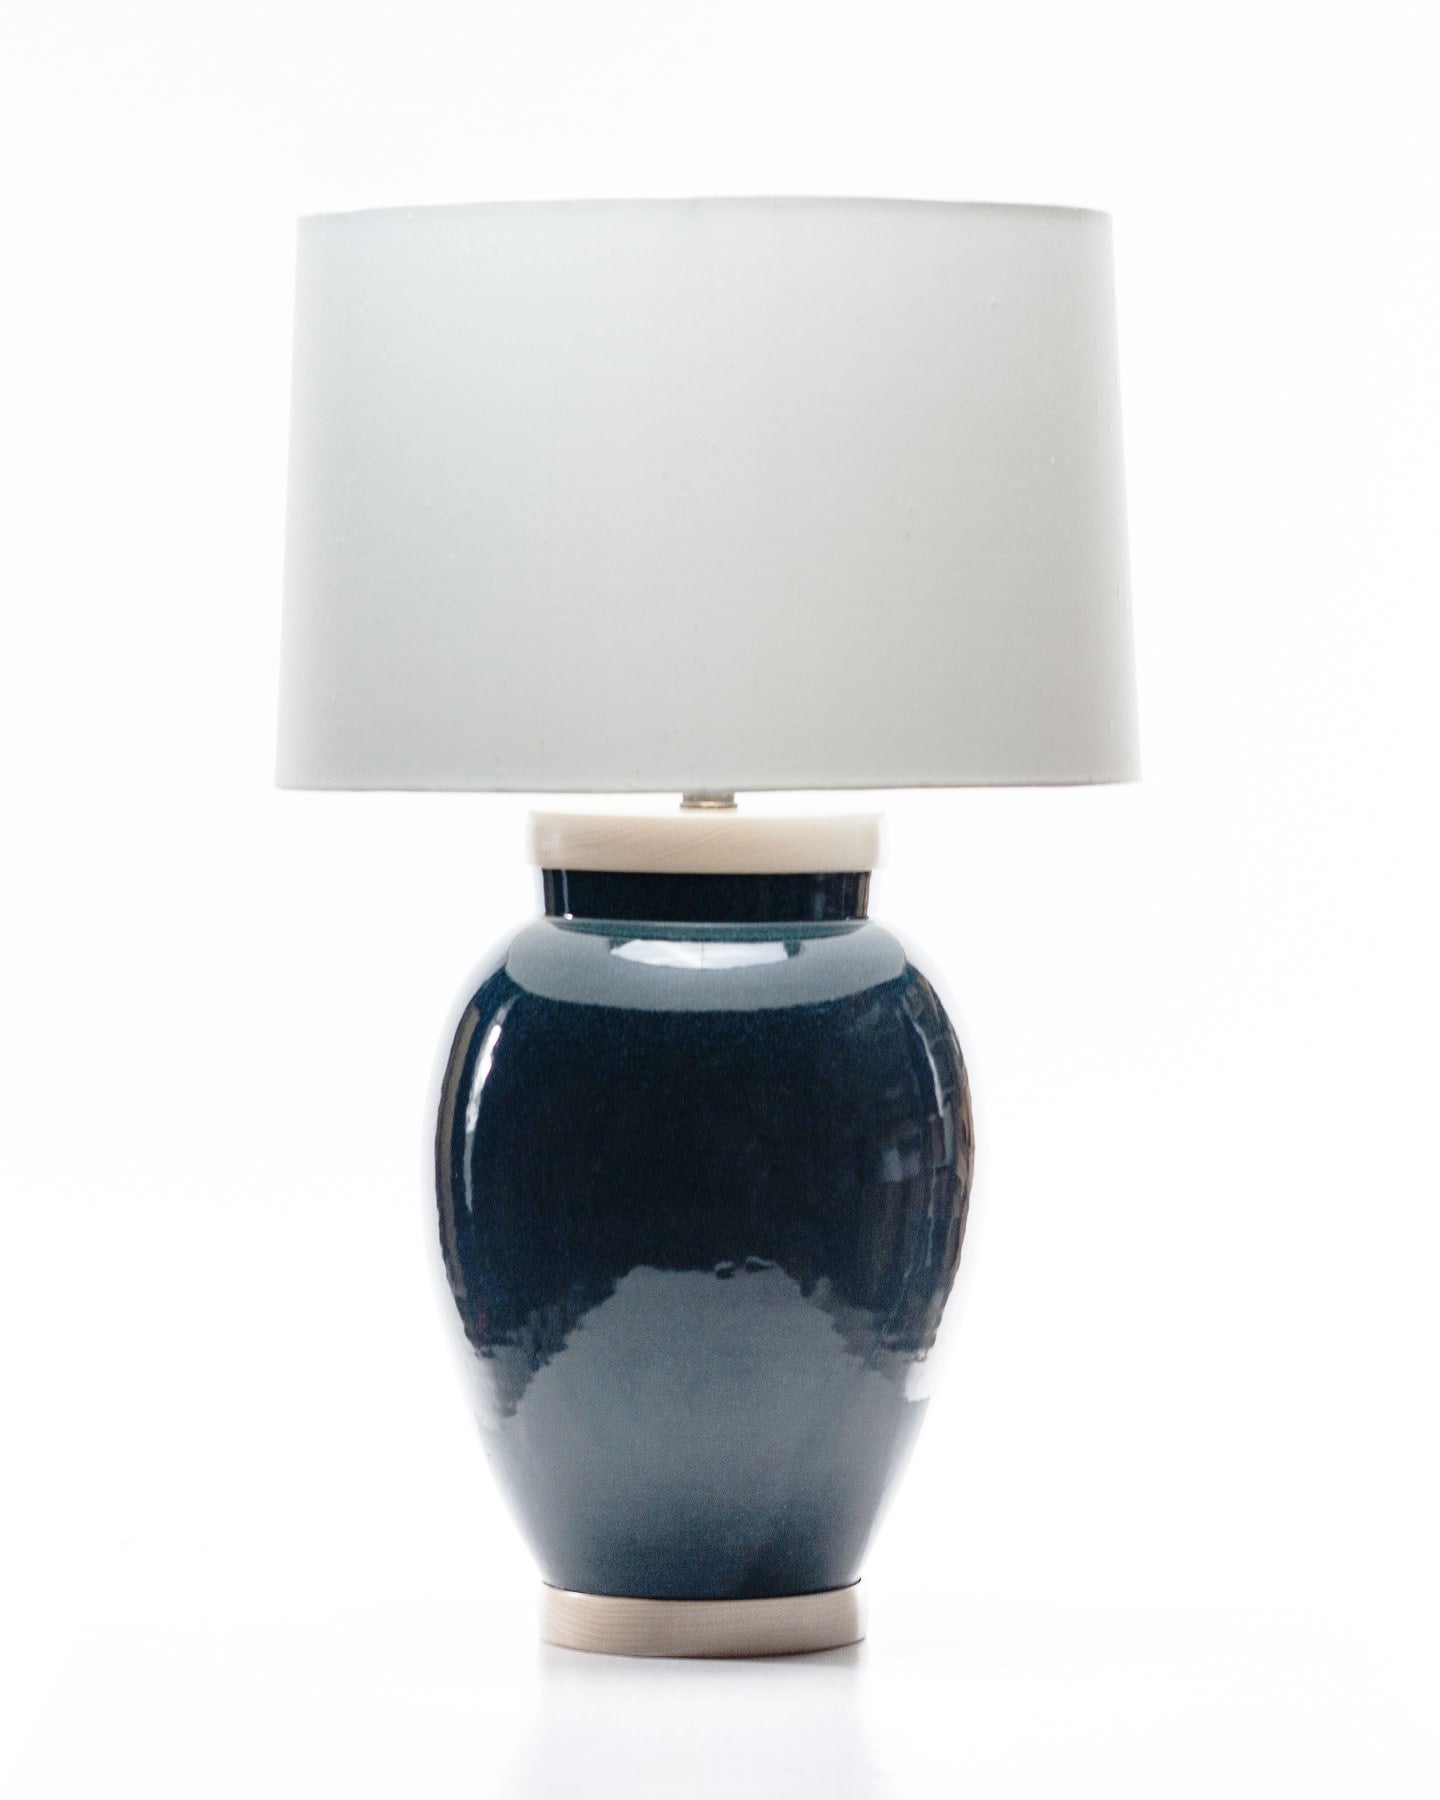 Sybil Porcelain Table Lamp in Ocean Glaze